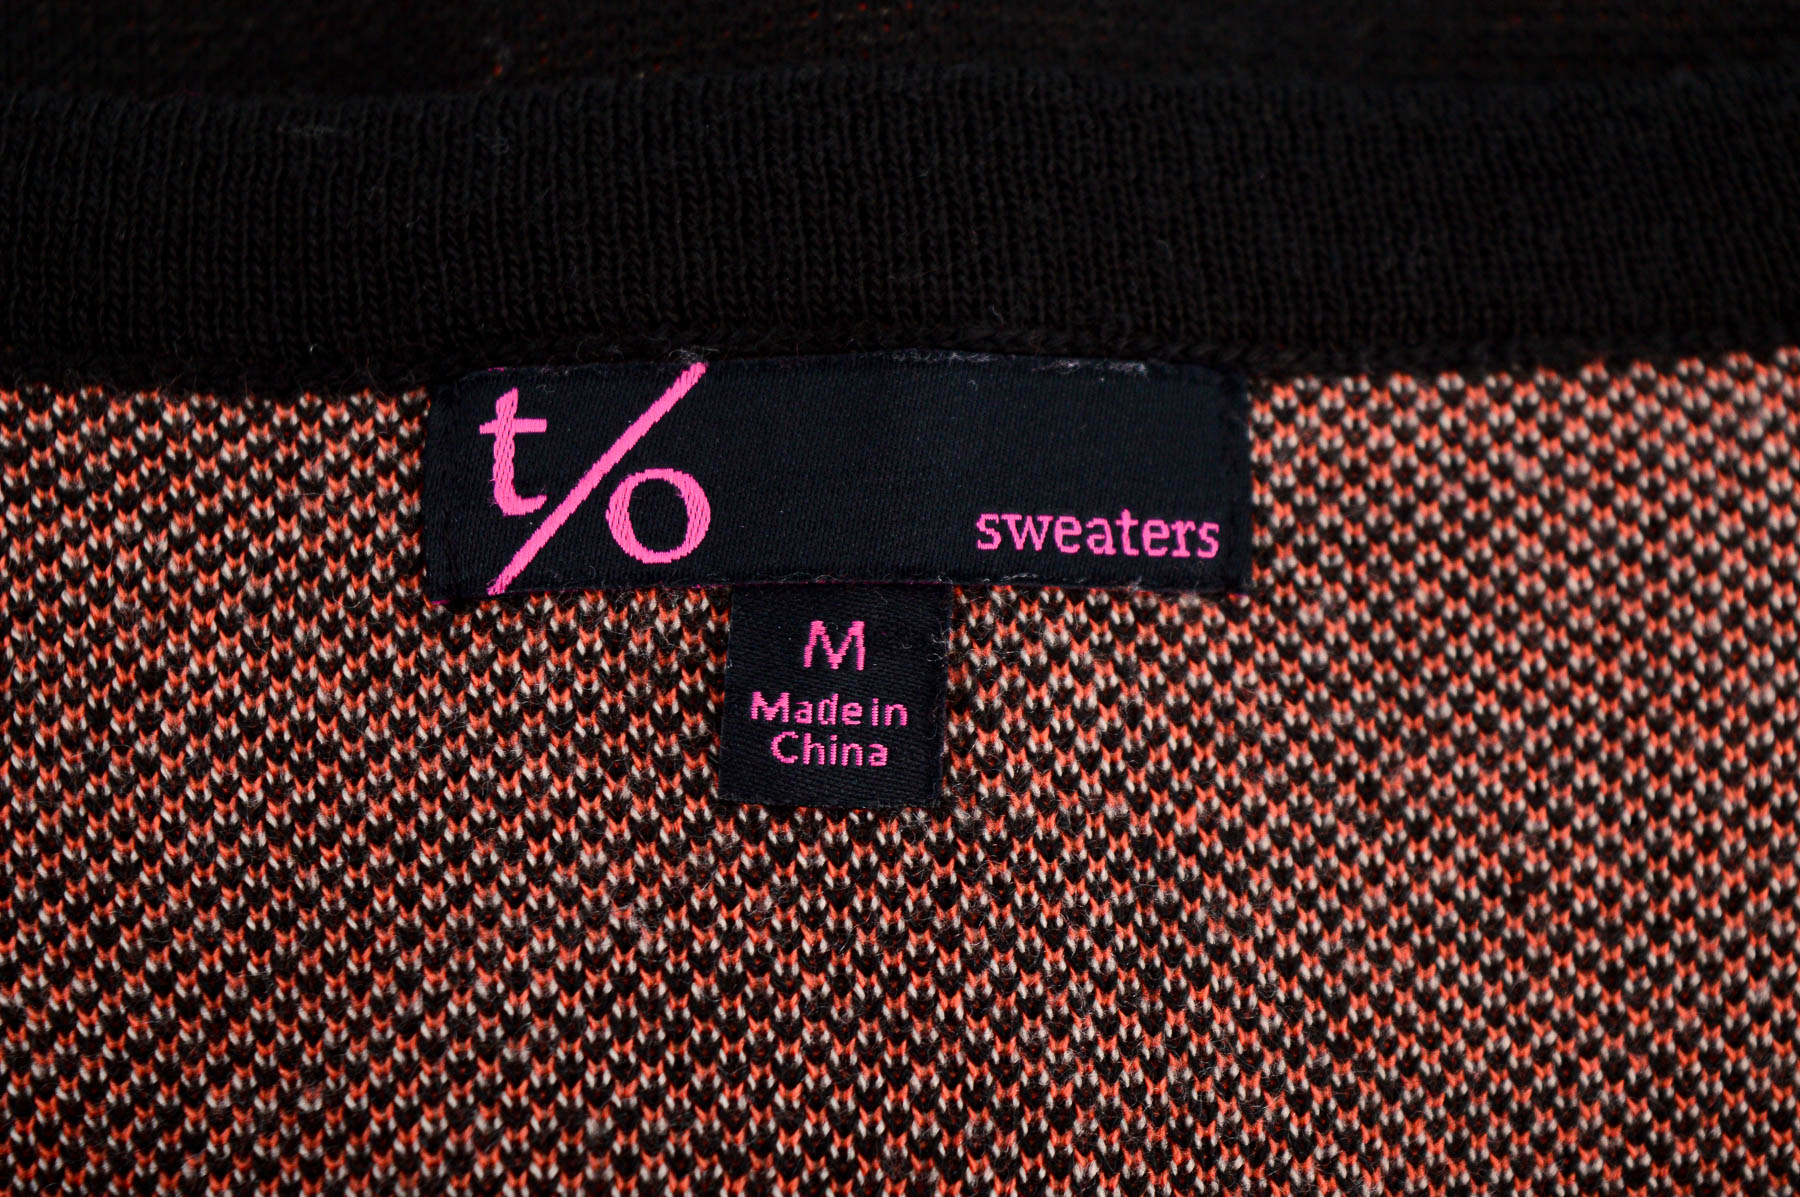 Rochiа - T/O sweaters - 2